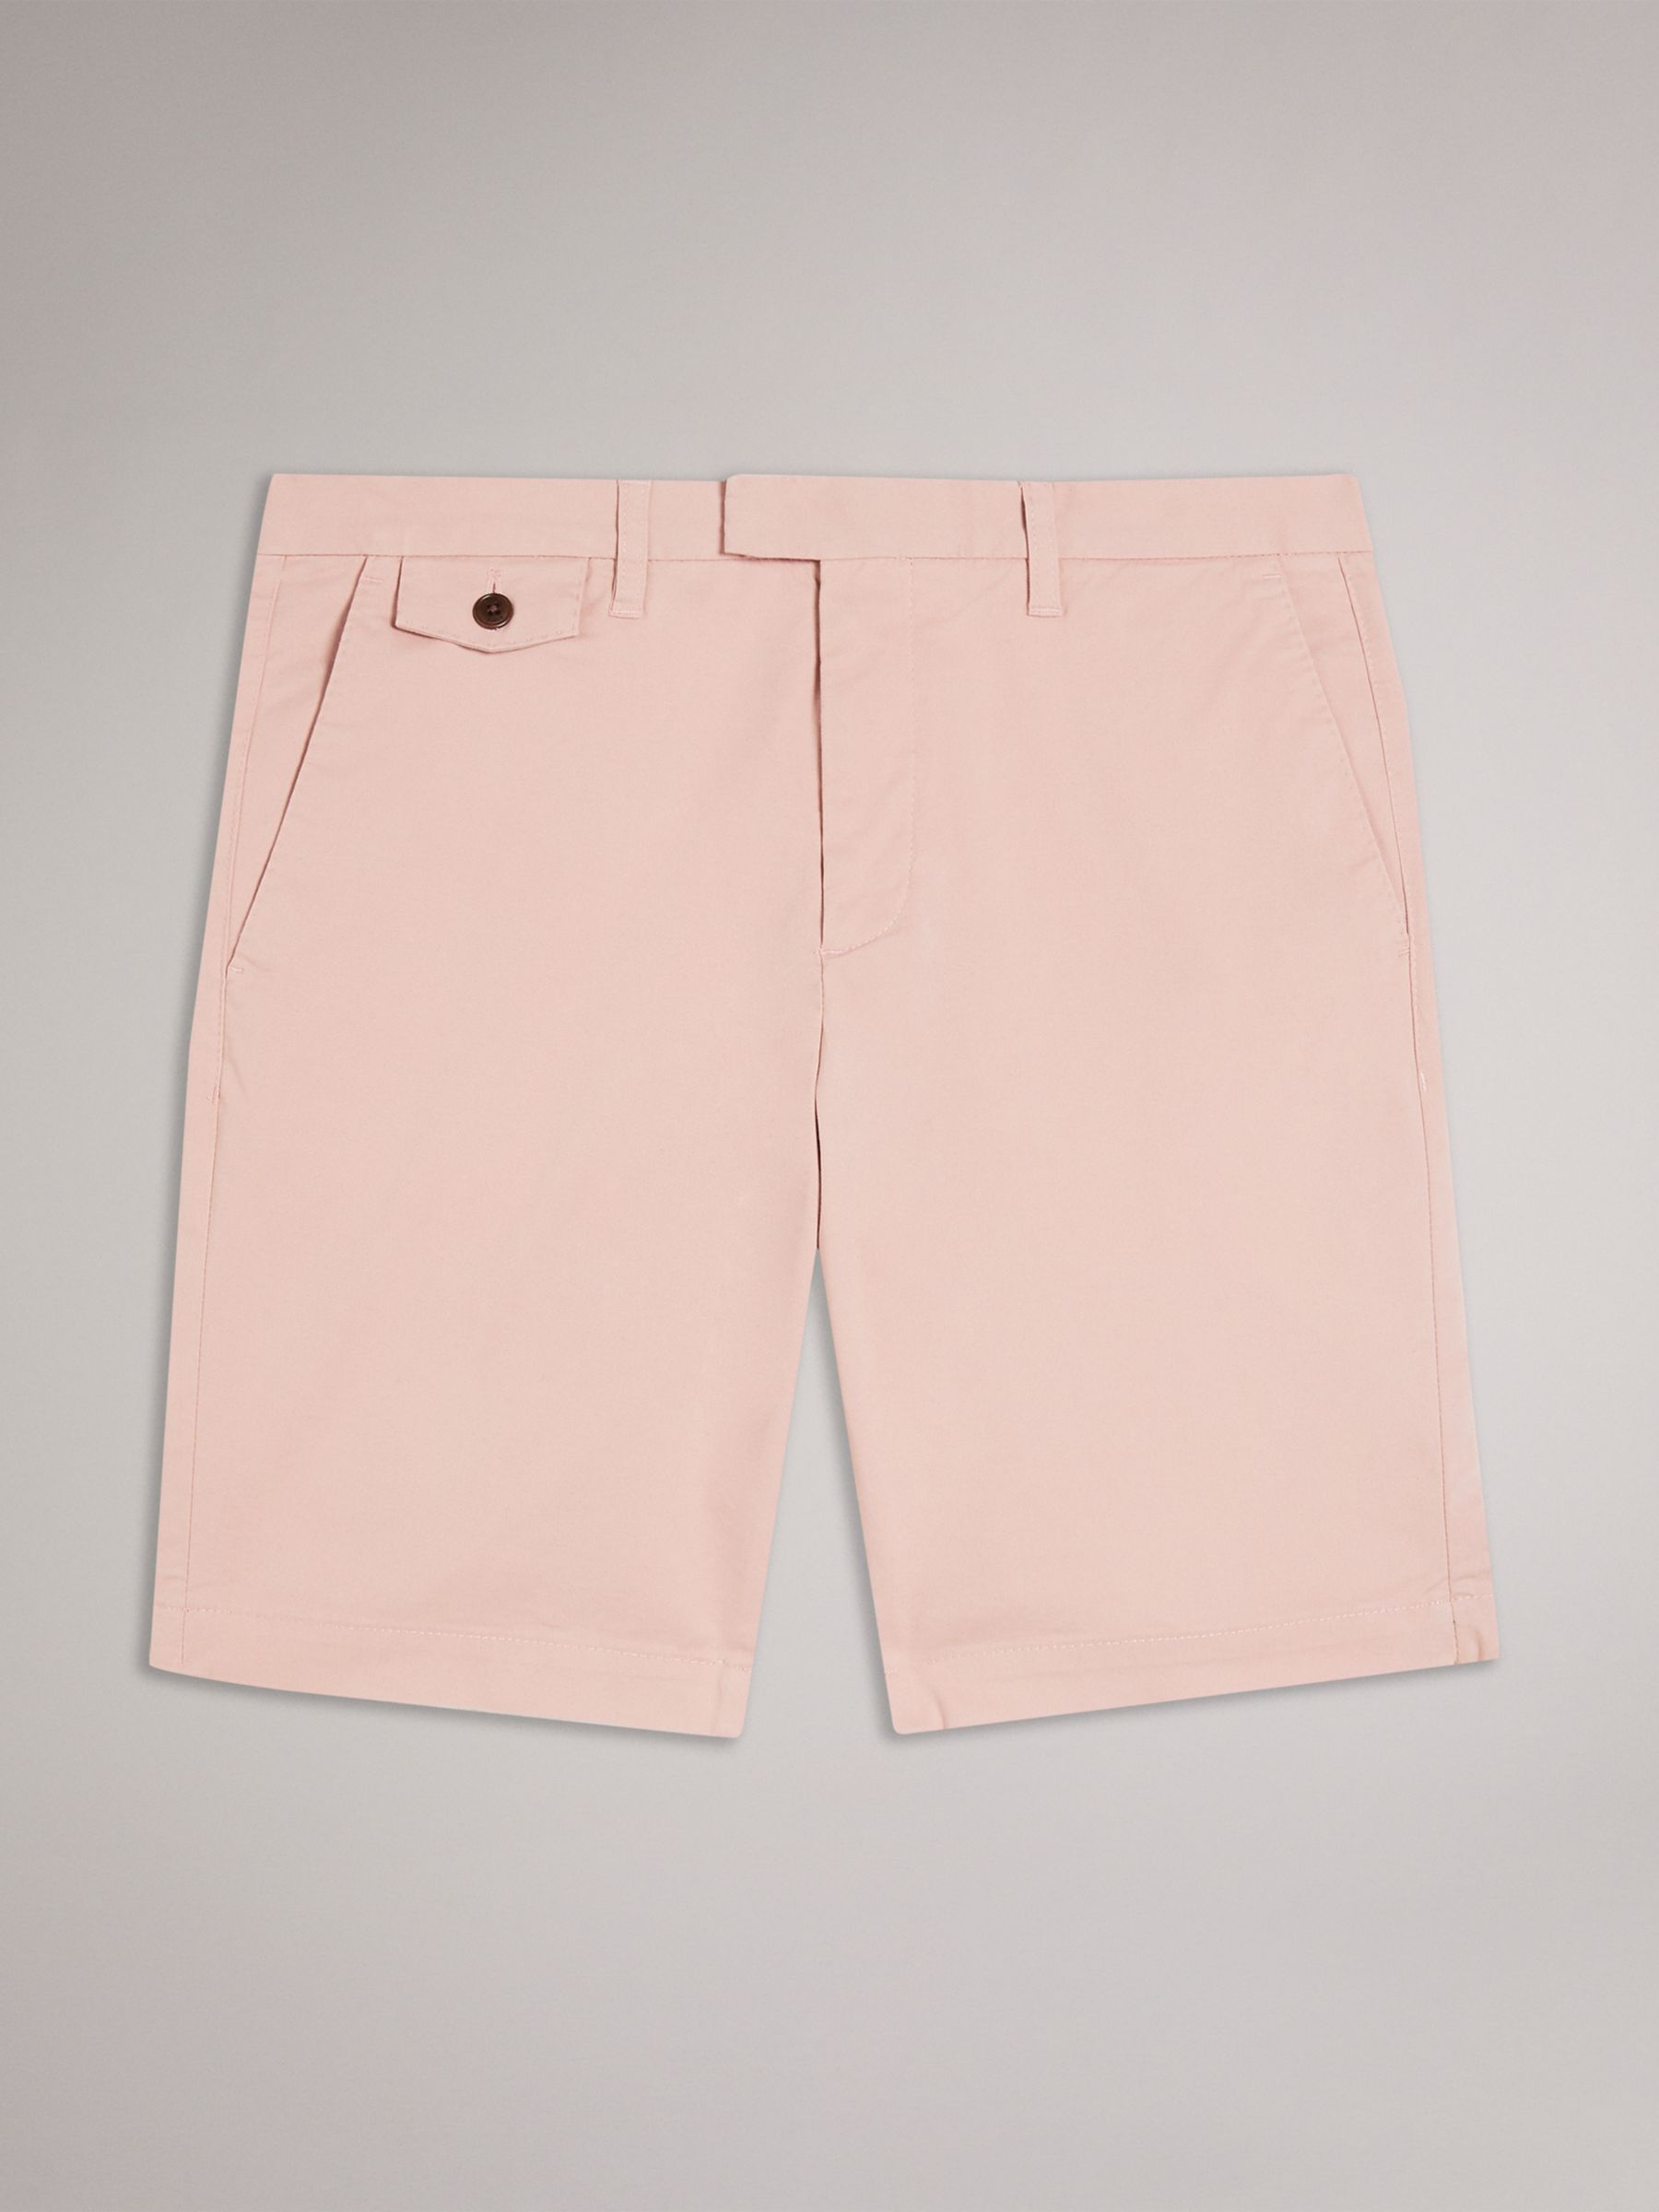 Ted Baker Ashfrd Chino Shorts, Pink, 28R